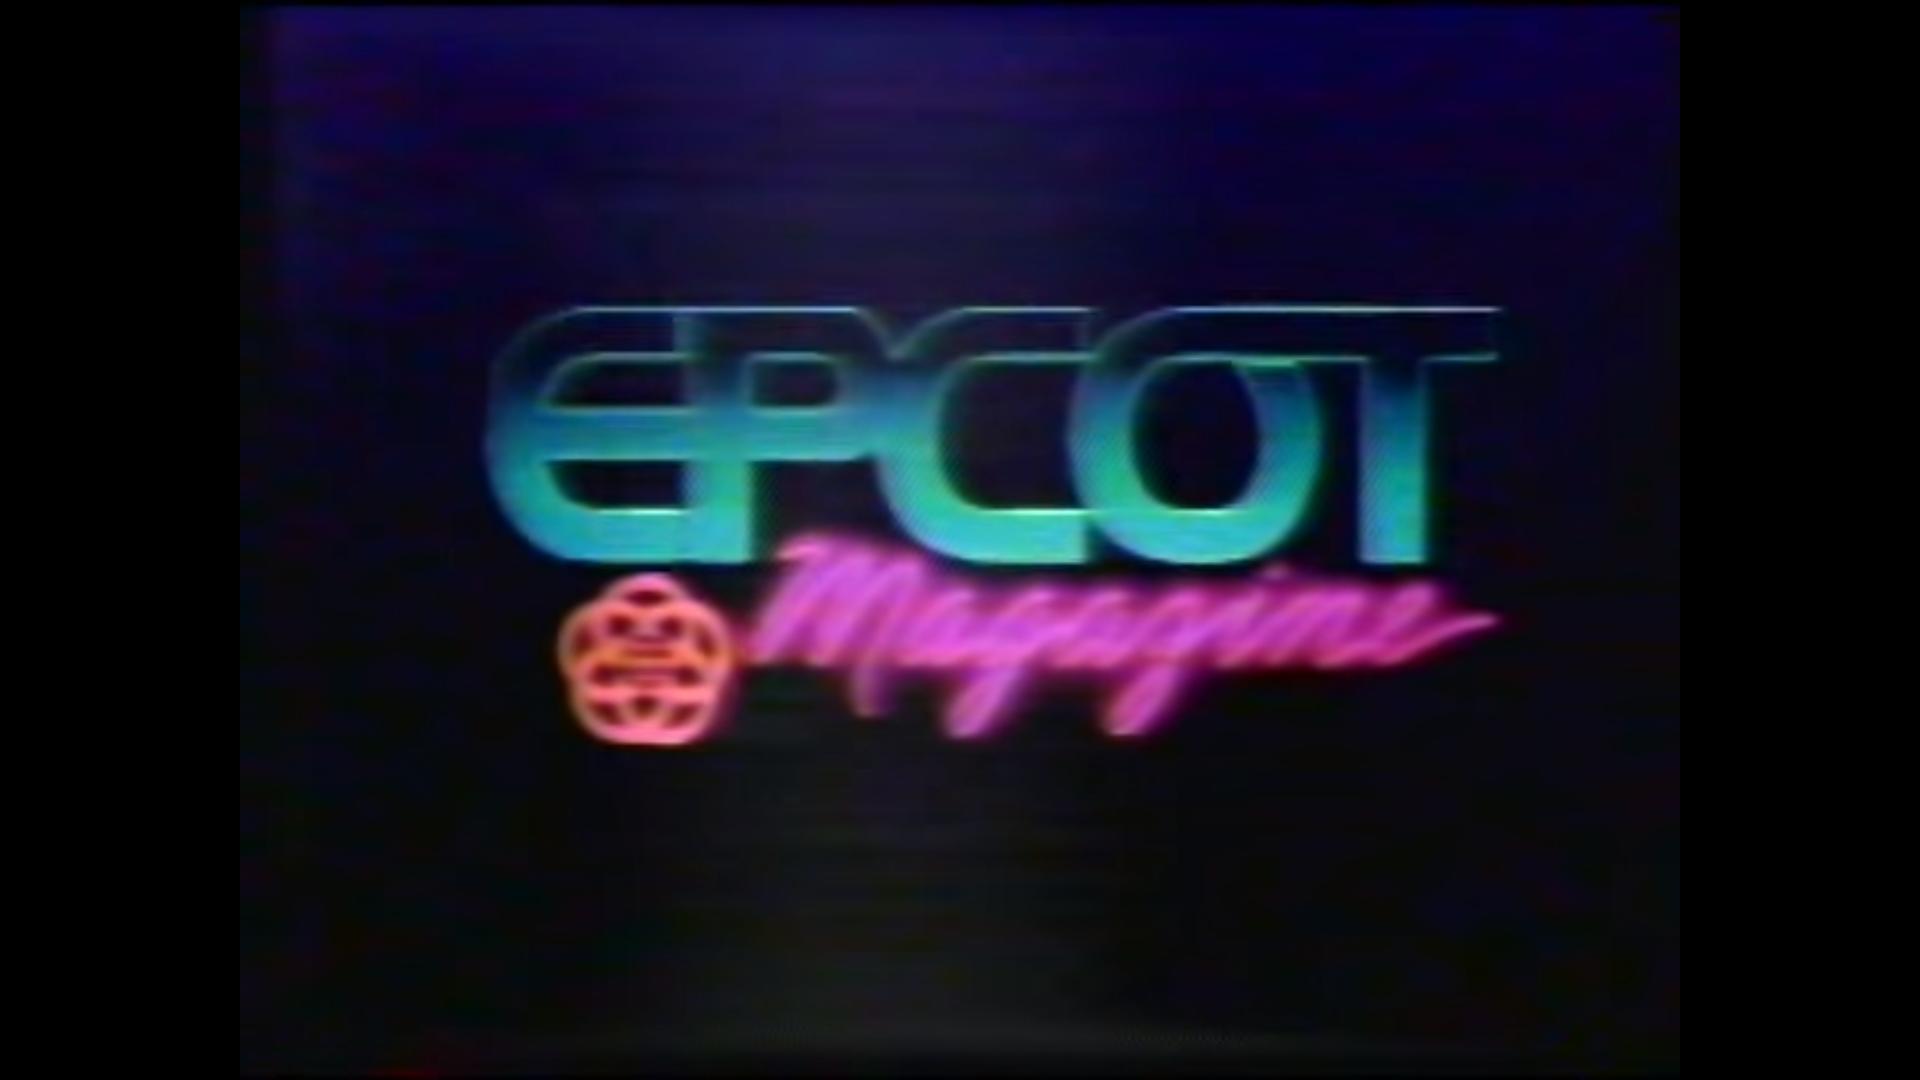 Epcot Magazine